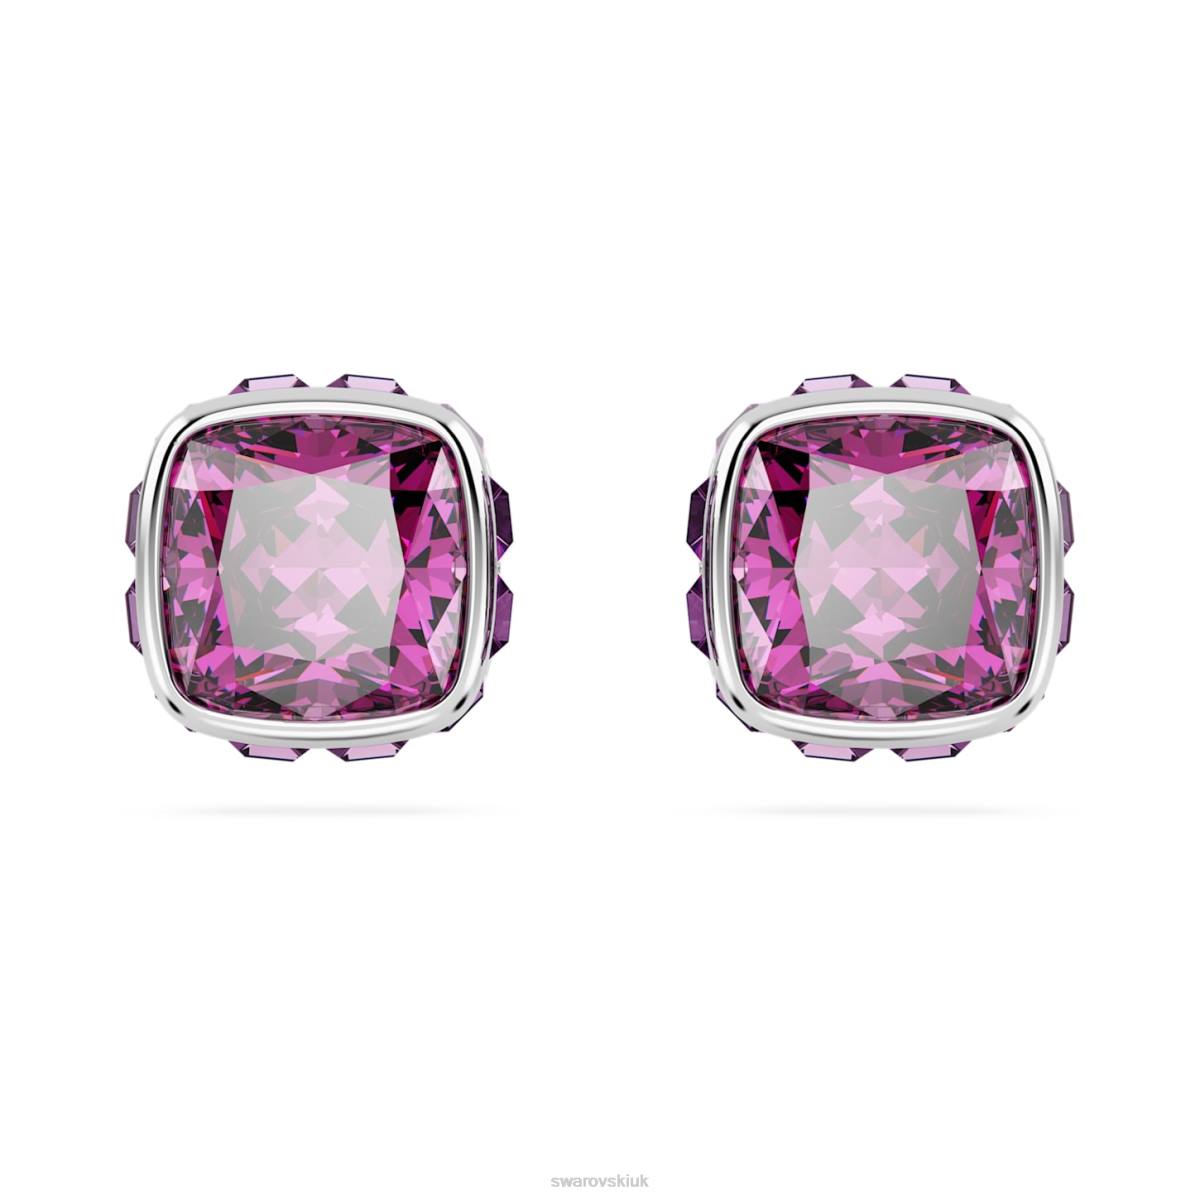 Jewelry Swarovski Birthstone stud earrings Square cut February, Pink, Rhodium plated 48JX735